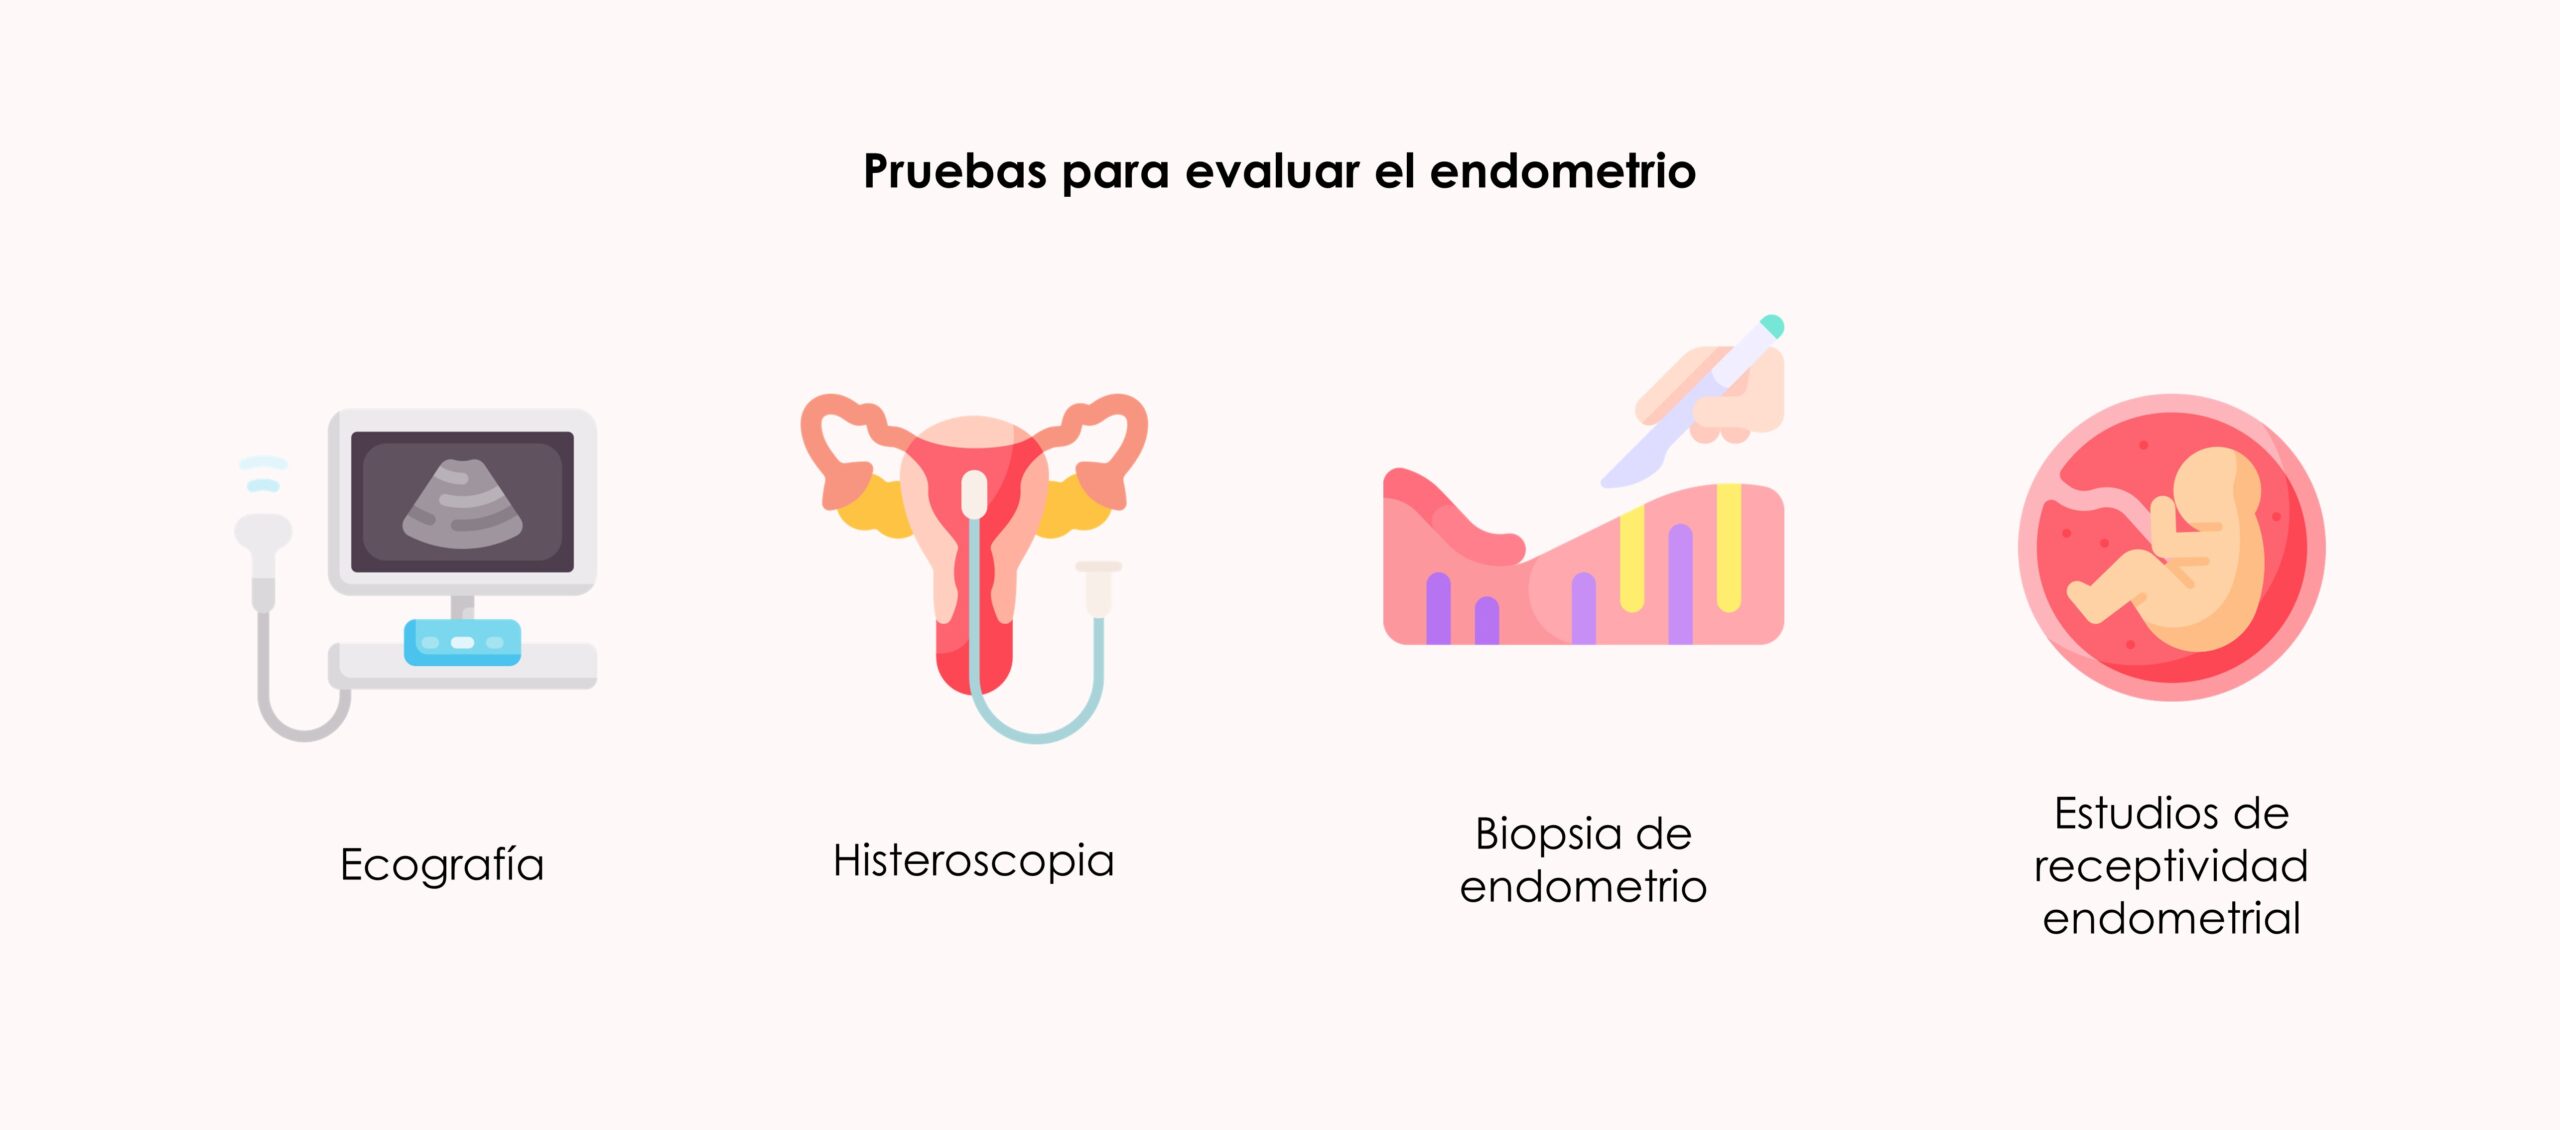 Pruebas para evaluar el endometrio